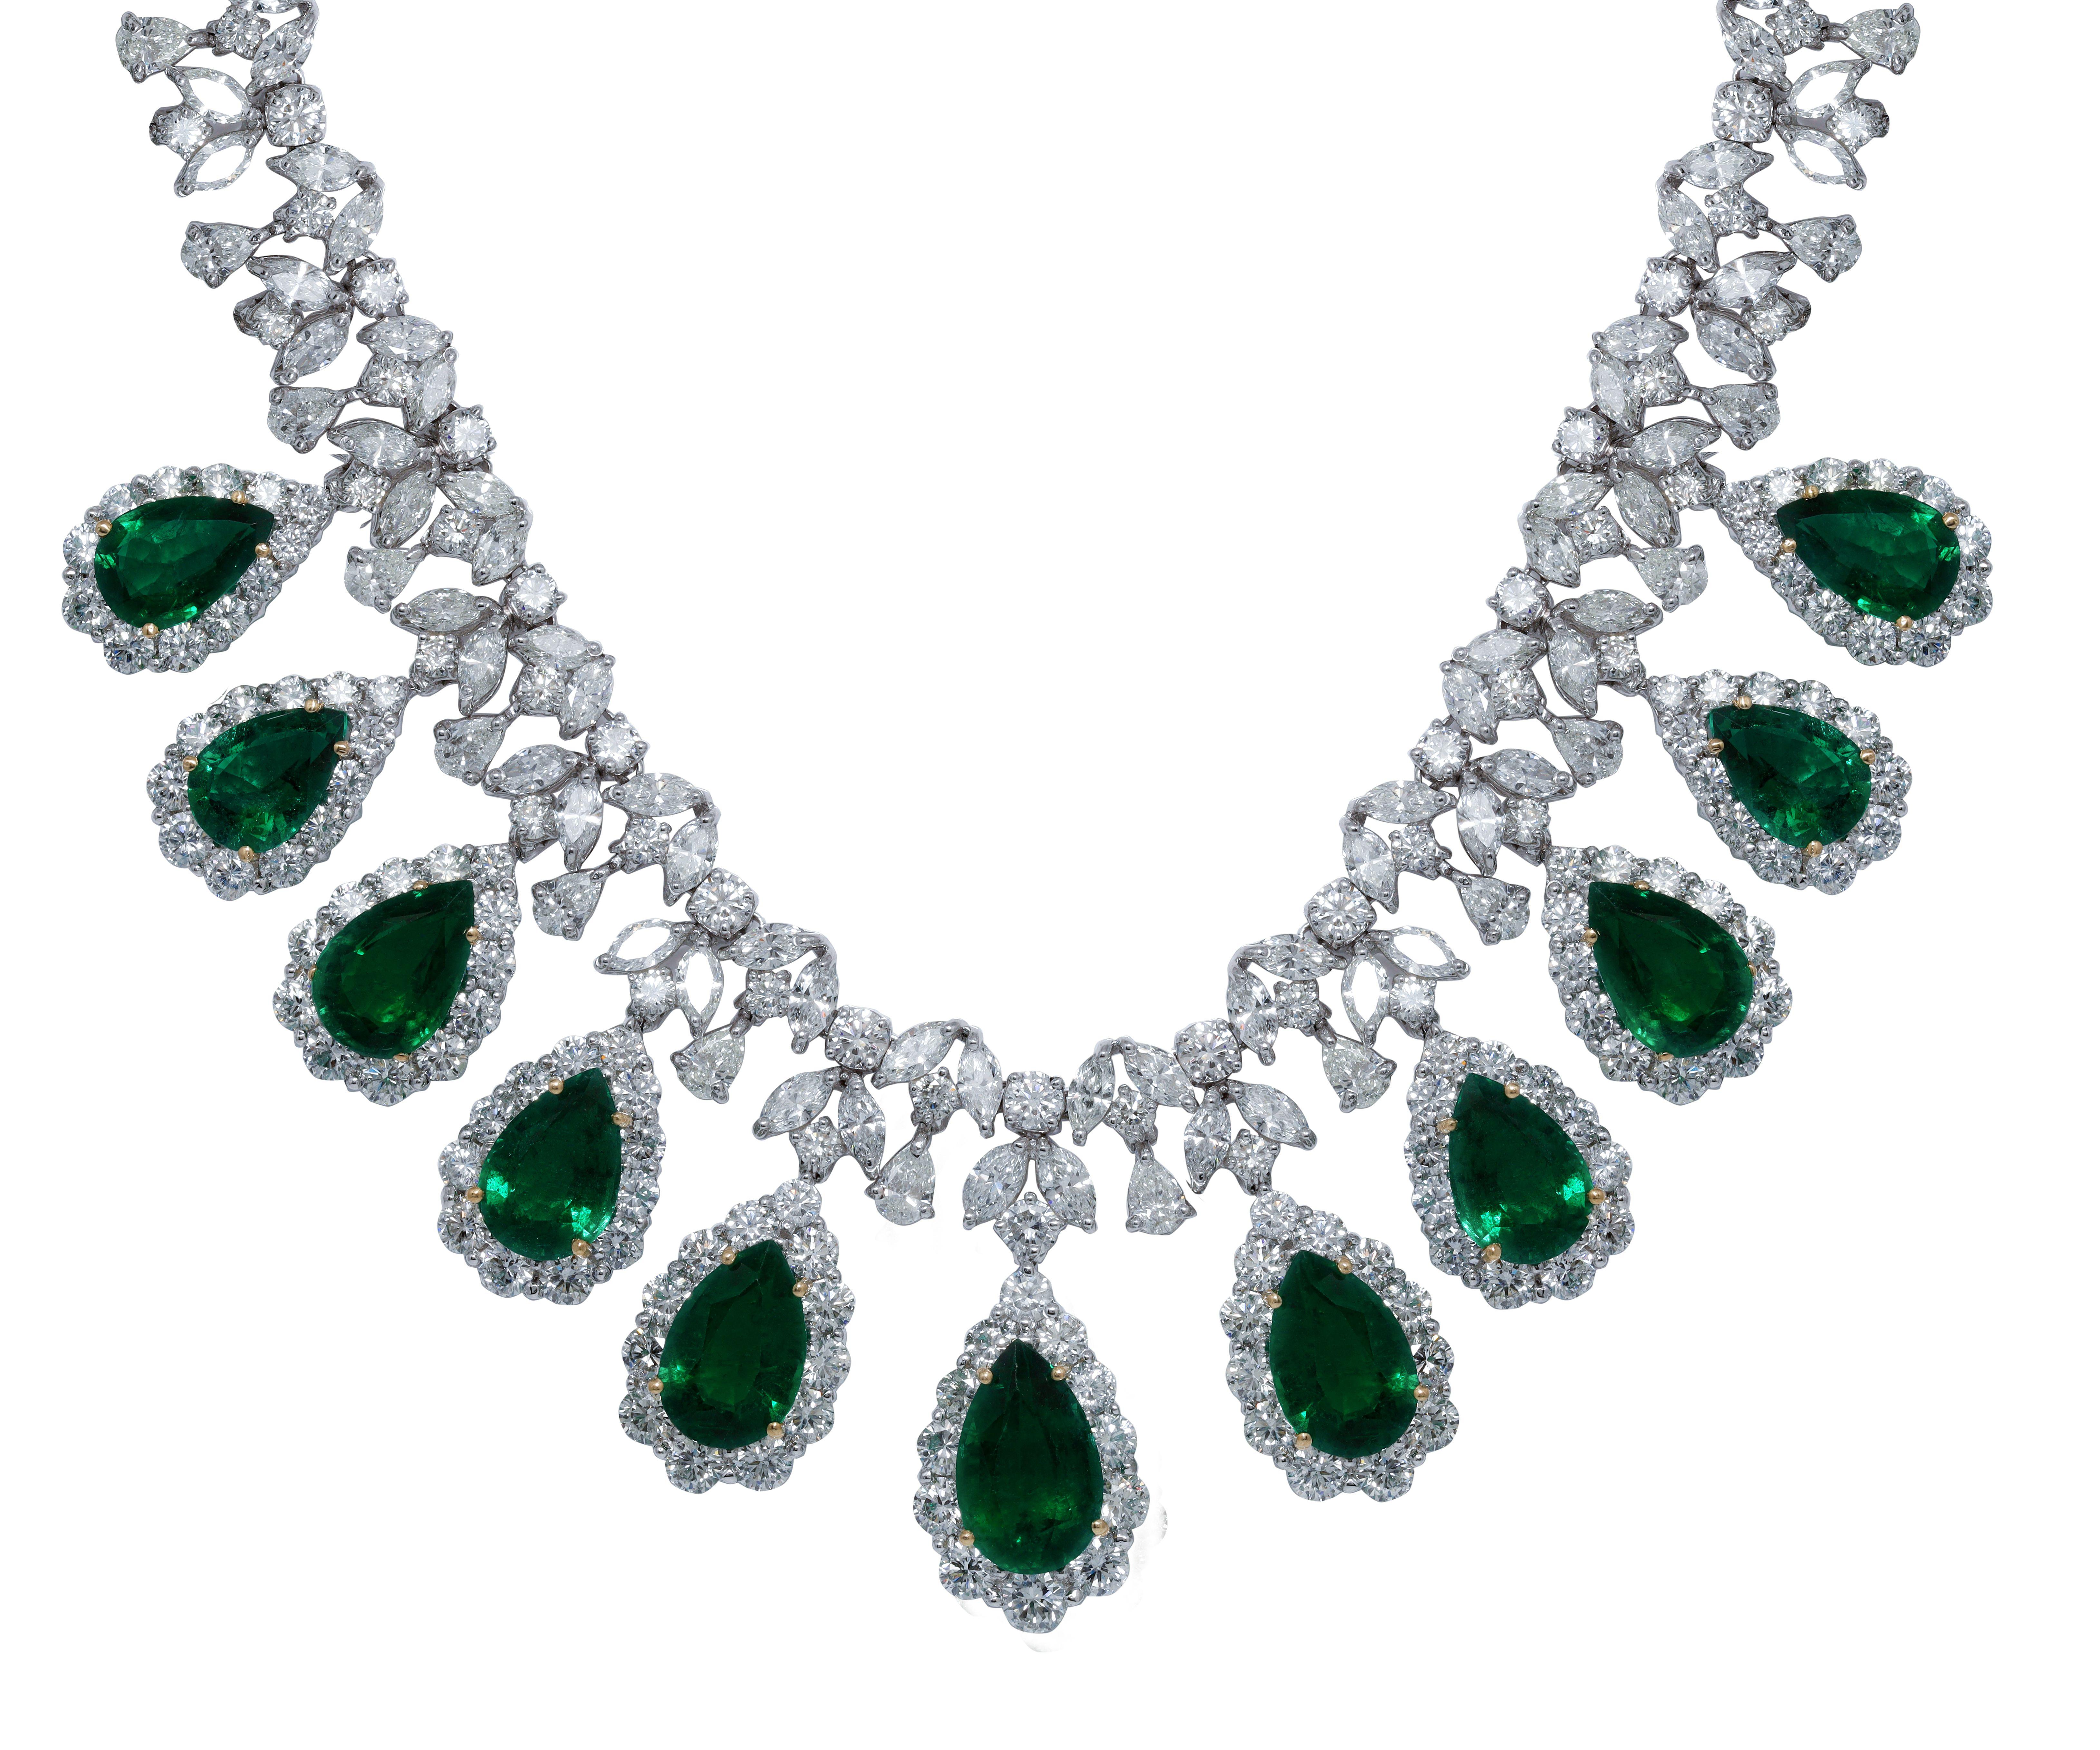 Platinum fasion necklace 11 zambian pear shape emeralds 34.51 cts with 32.40 cts diamonds certified C. Dunaigre